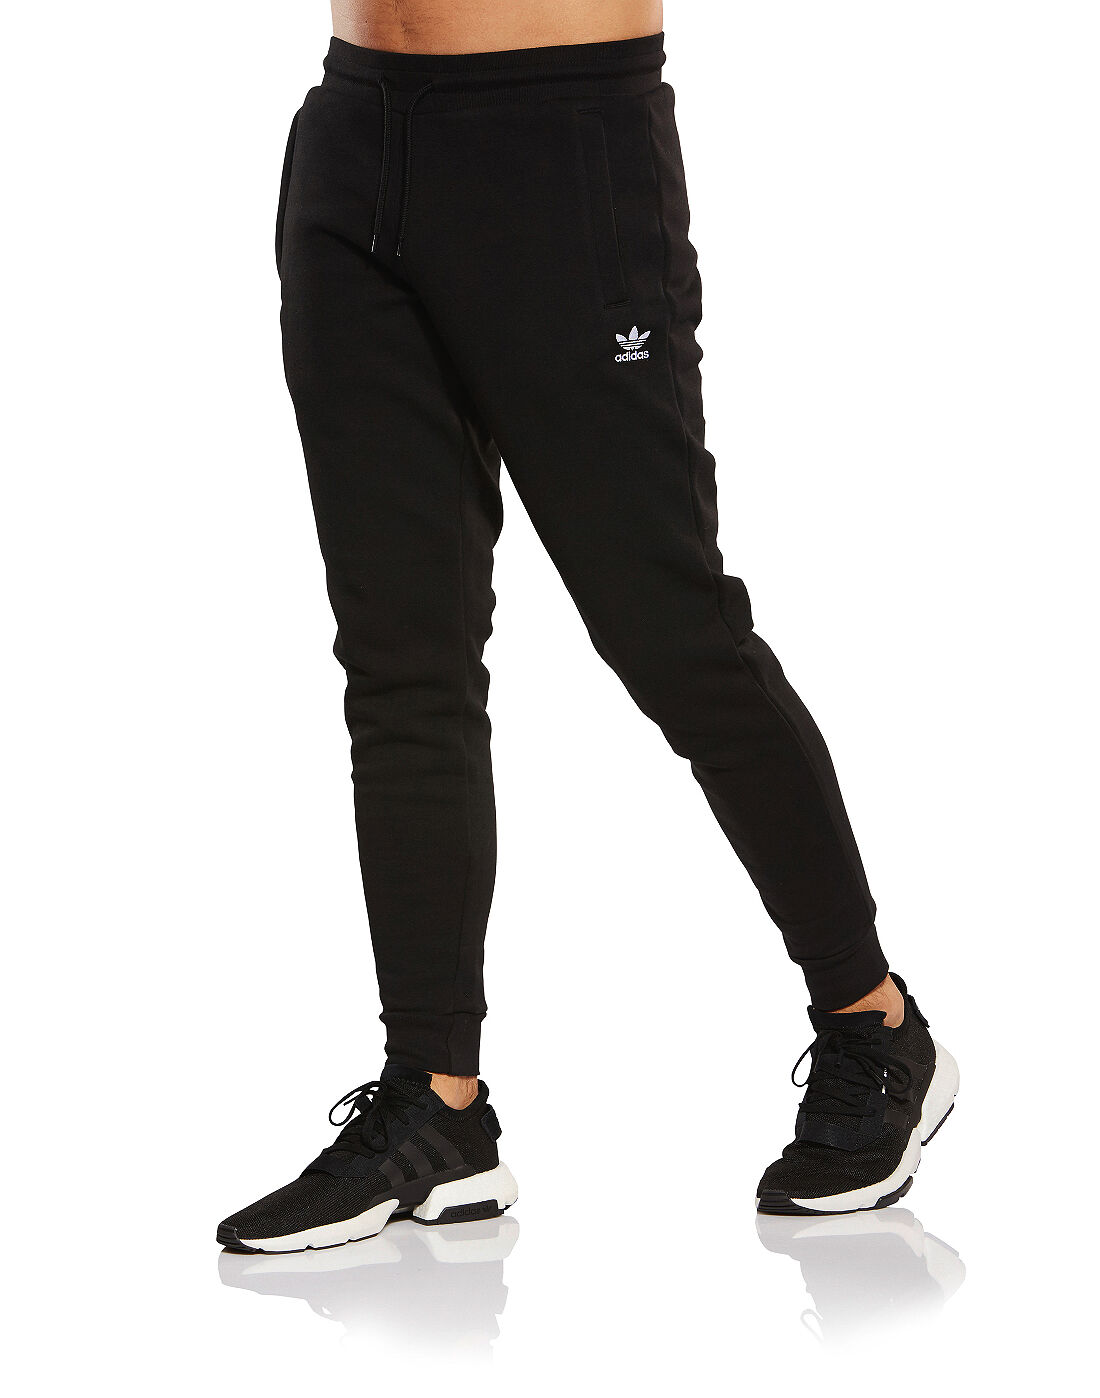 Men's Black adidas Originals Slim Pants 